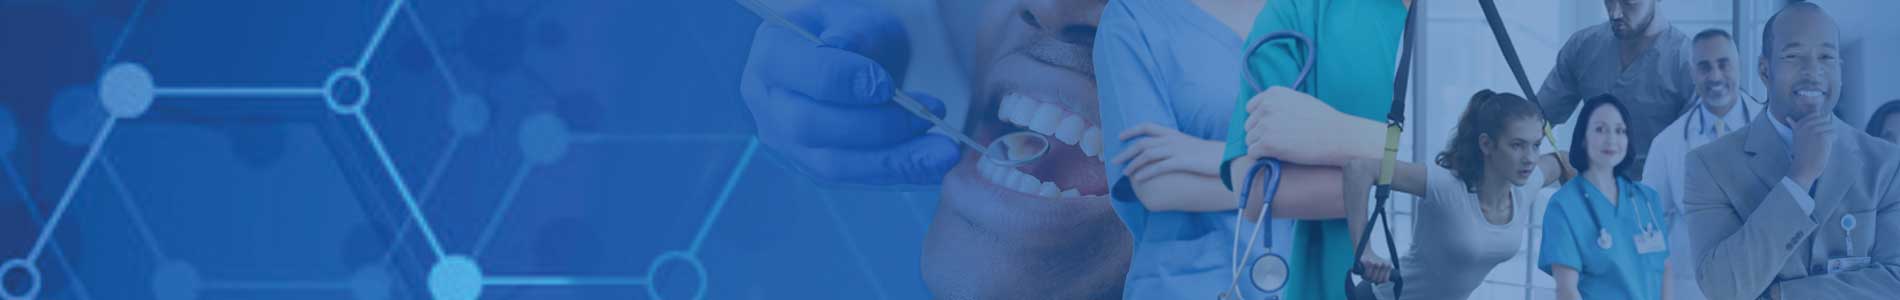 Dental Hygiene Academic Programs banner image